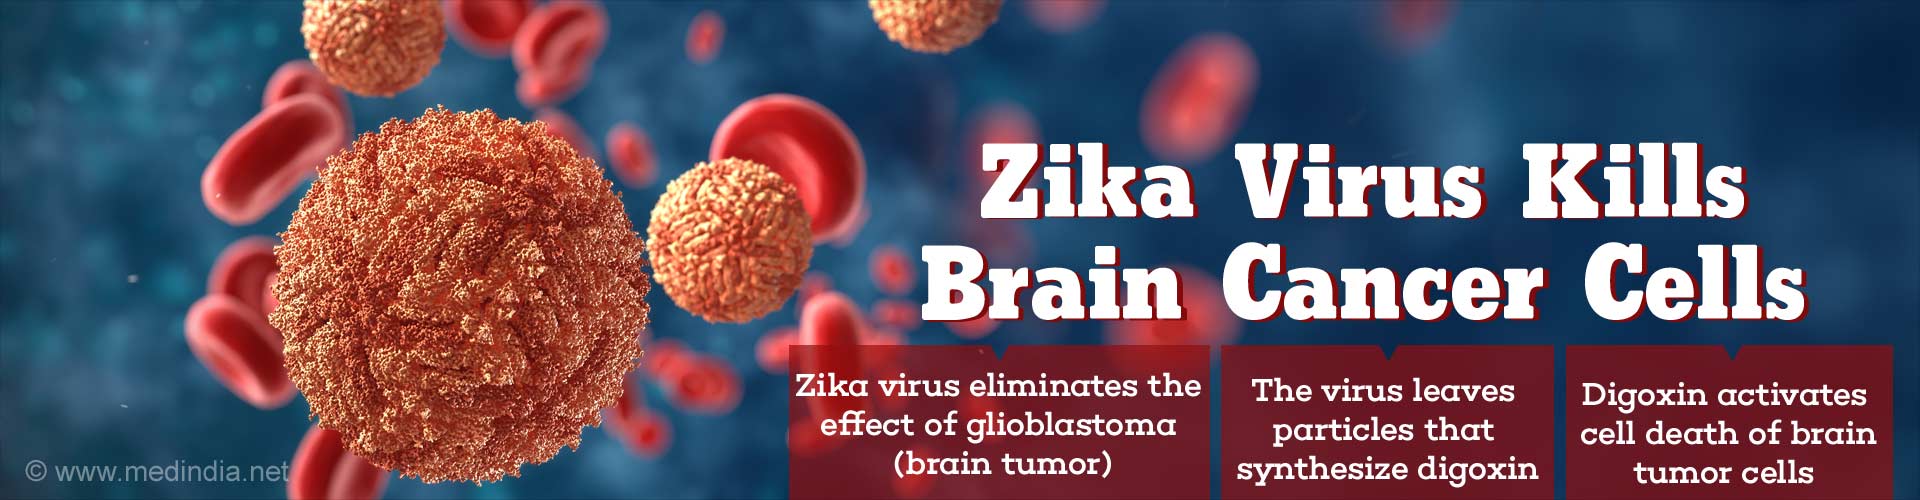 Zika virus kills brain cancer cells
- zika virus eliminates the effect of glioblastoma (brain tumor)
- the virus leaves particles that synthesize digoxin 
- Digoxin activates cell death of brain tumor